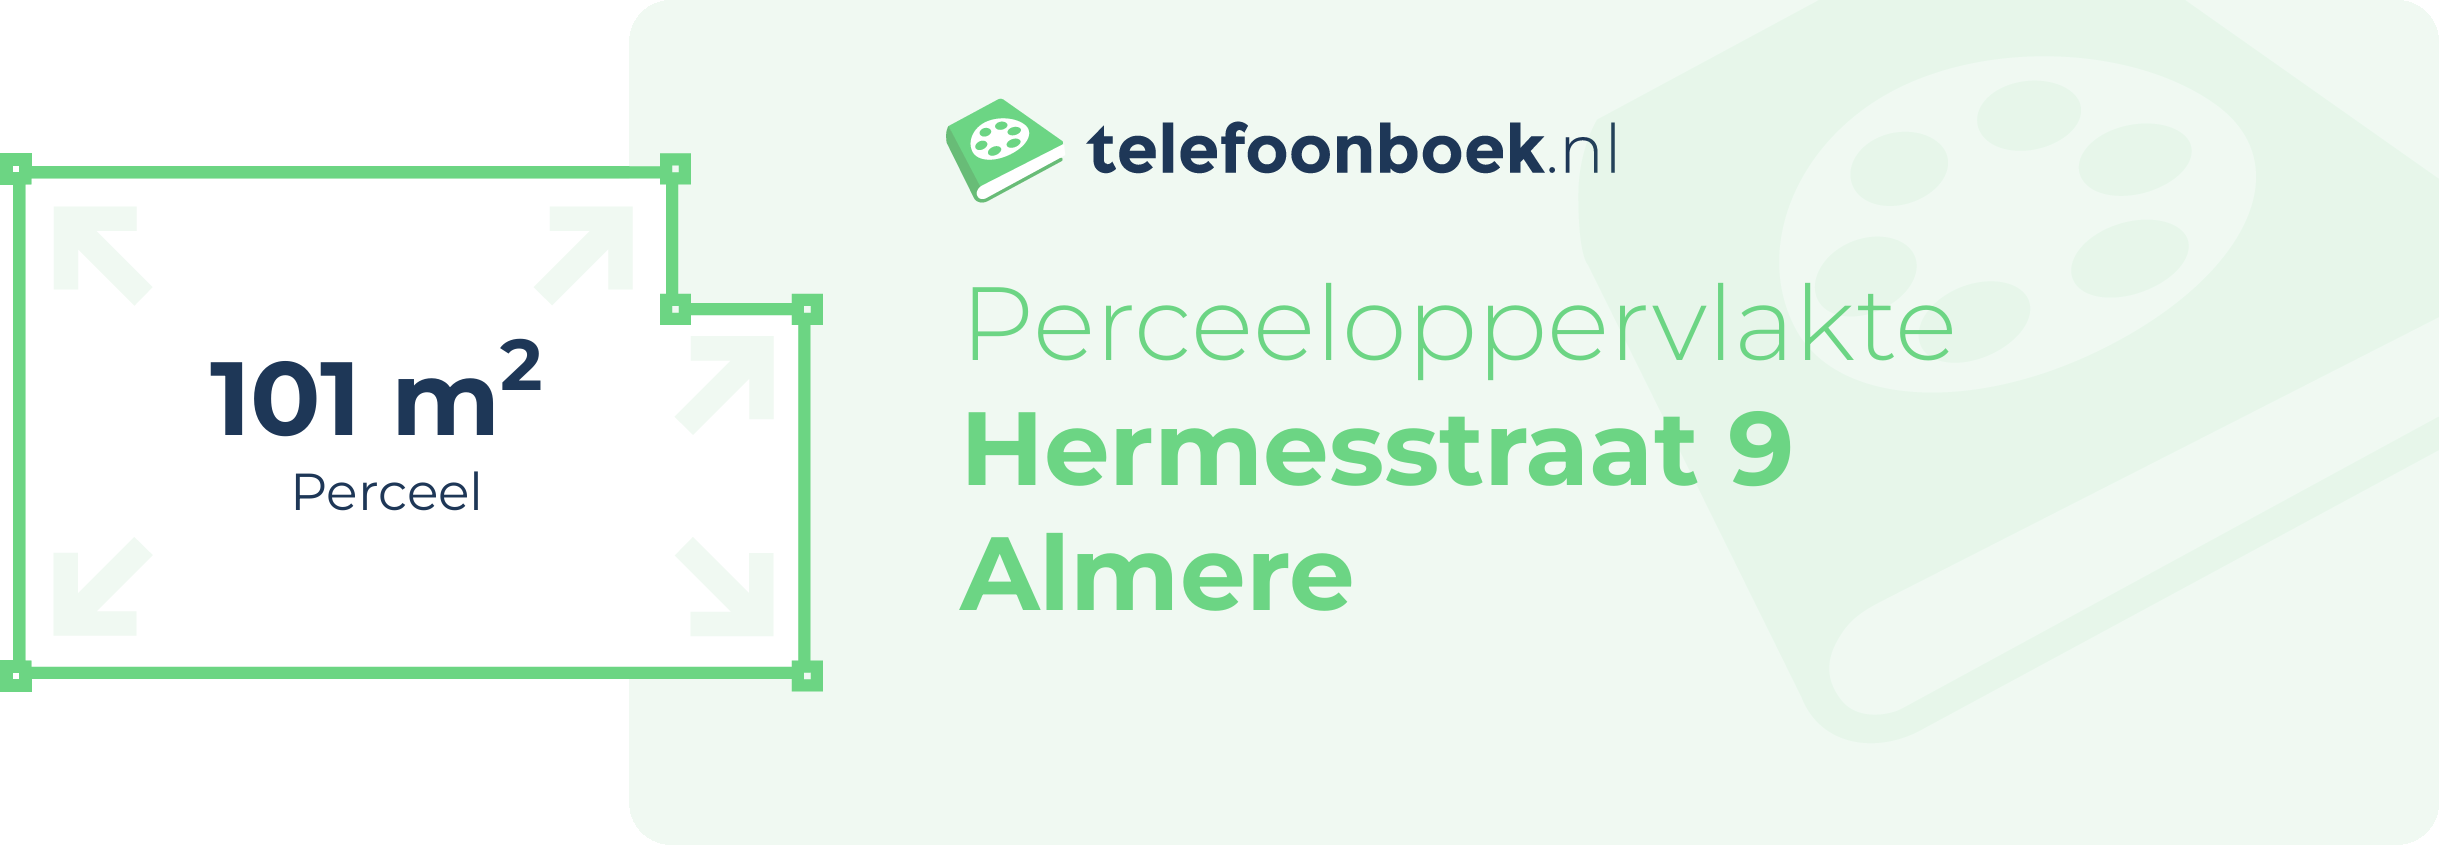 Perceeloppervlakte Hermesstraat 9 Almere